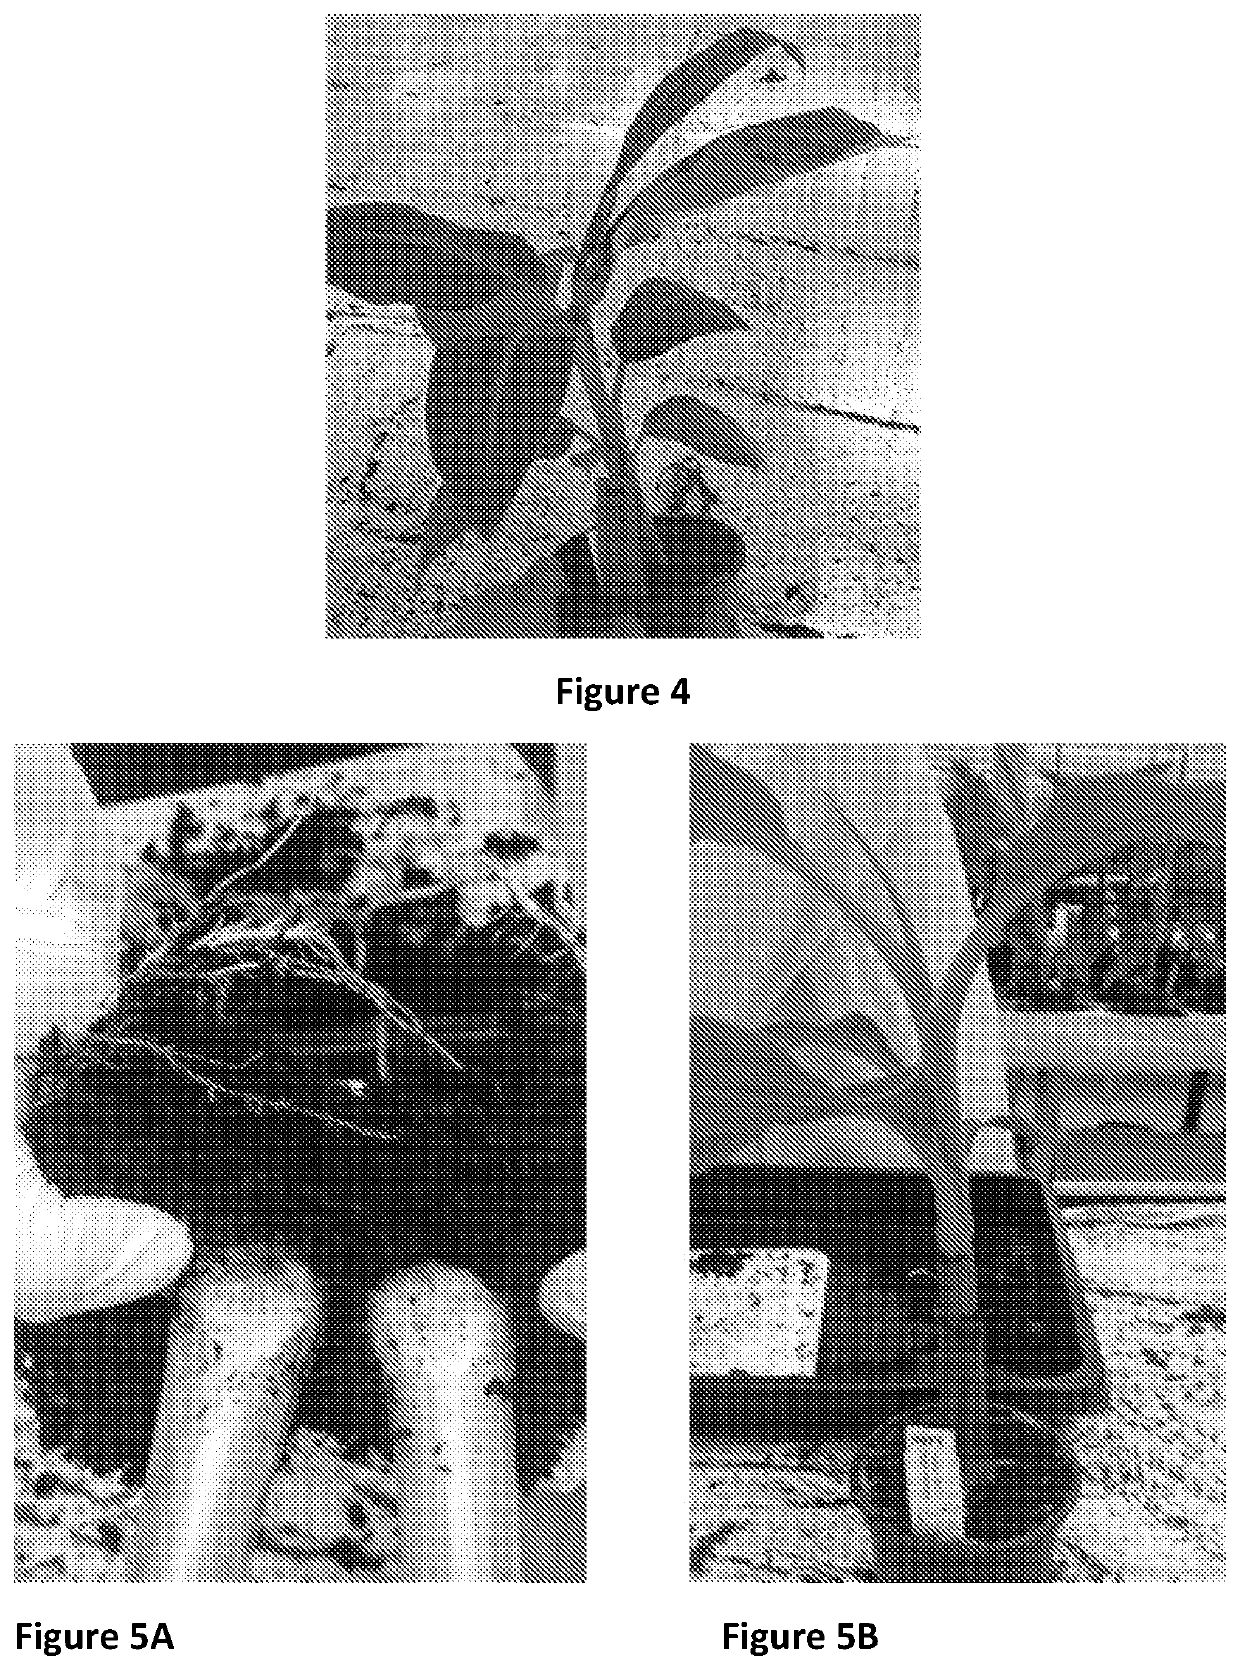 A method for producing banana plants with tolerance to fusarium oxysporum cubensis tr4